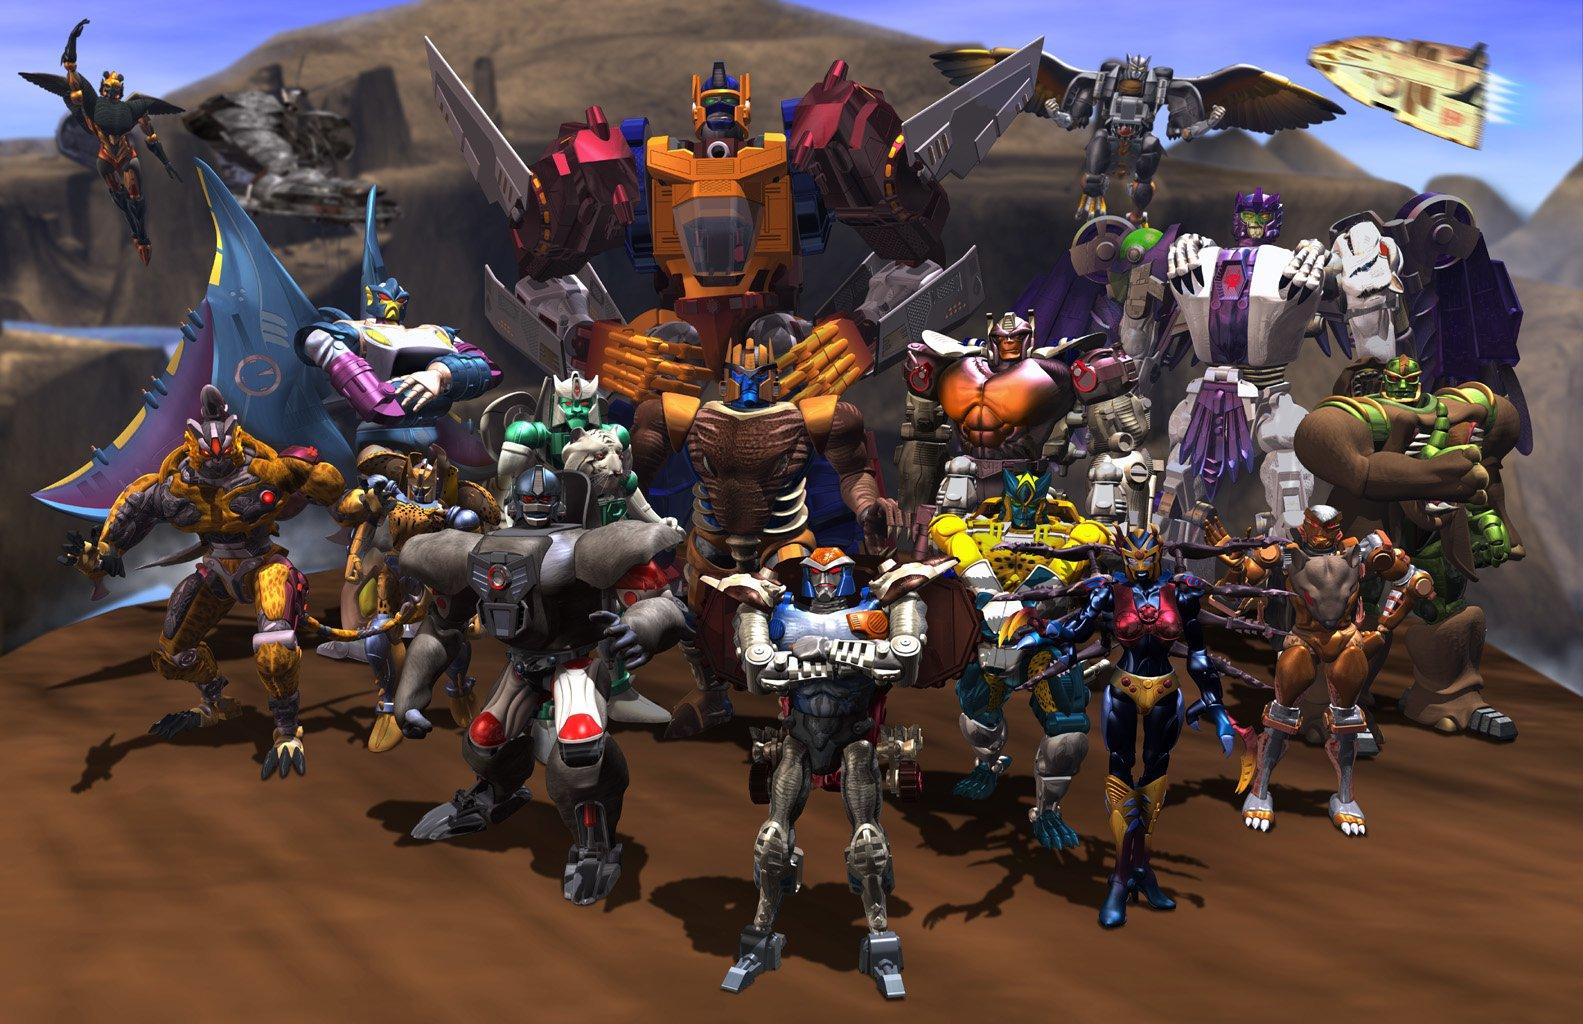 Beast Wars: Transformers Wallpaper